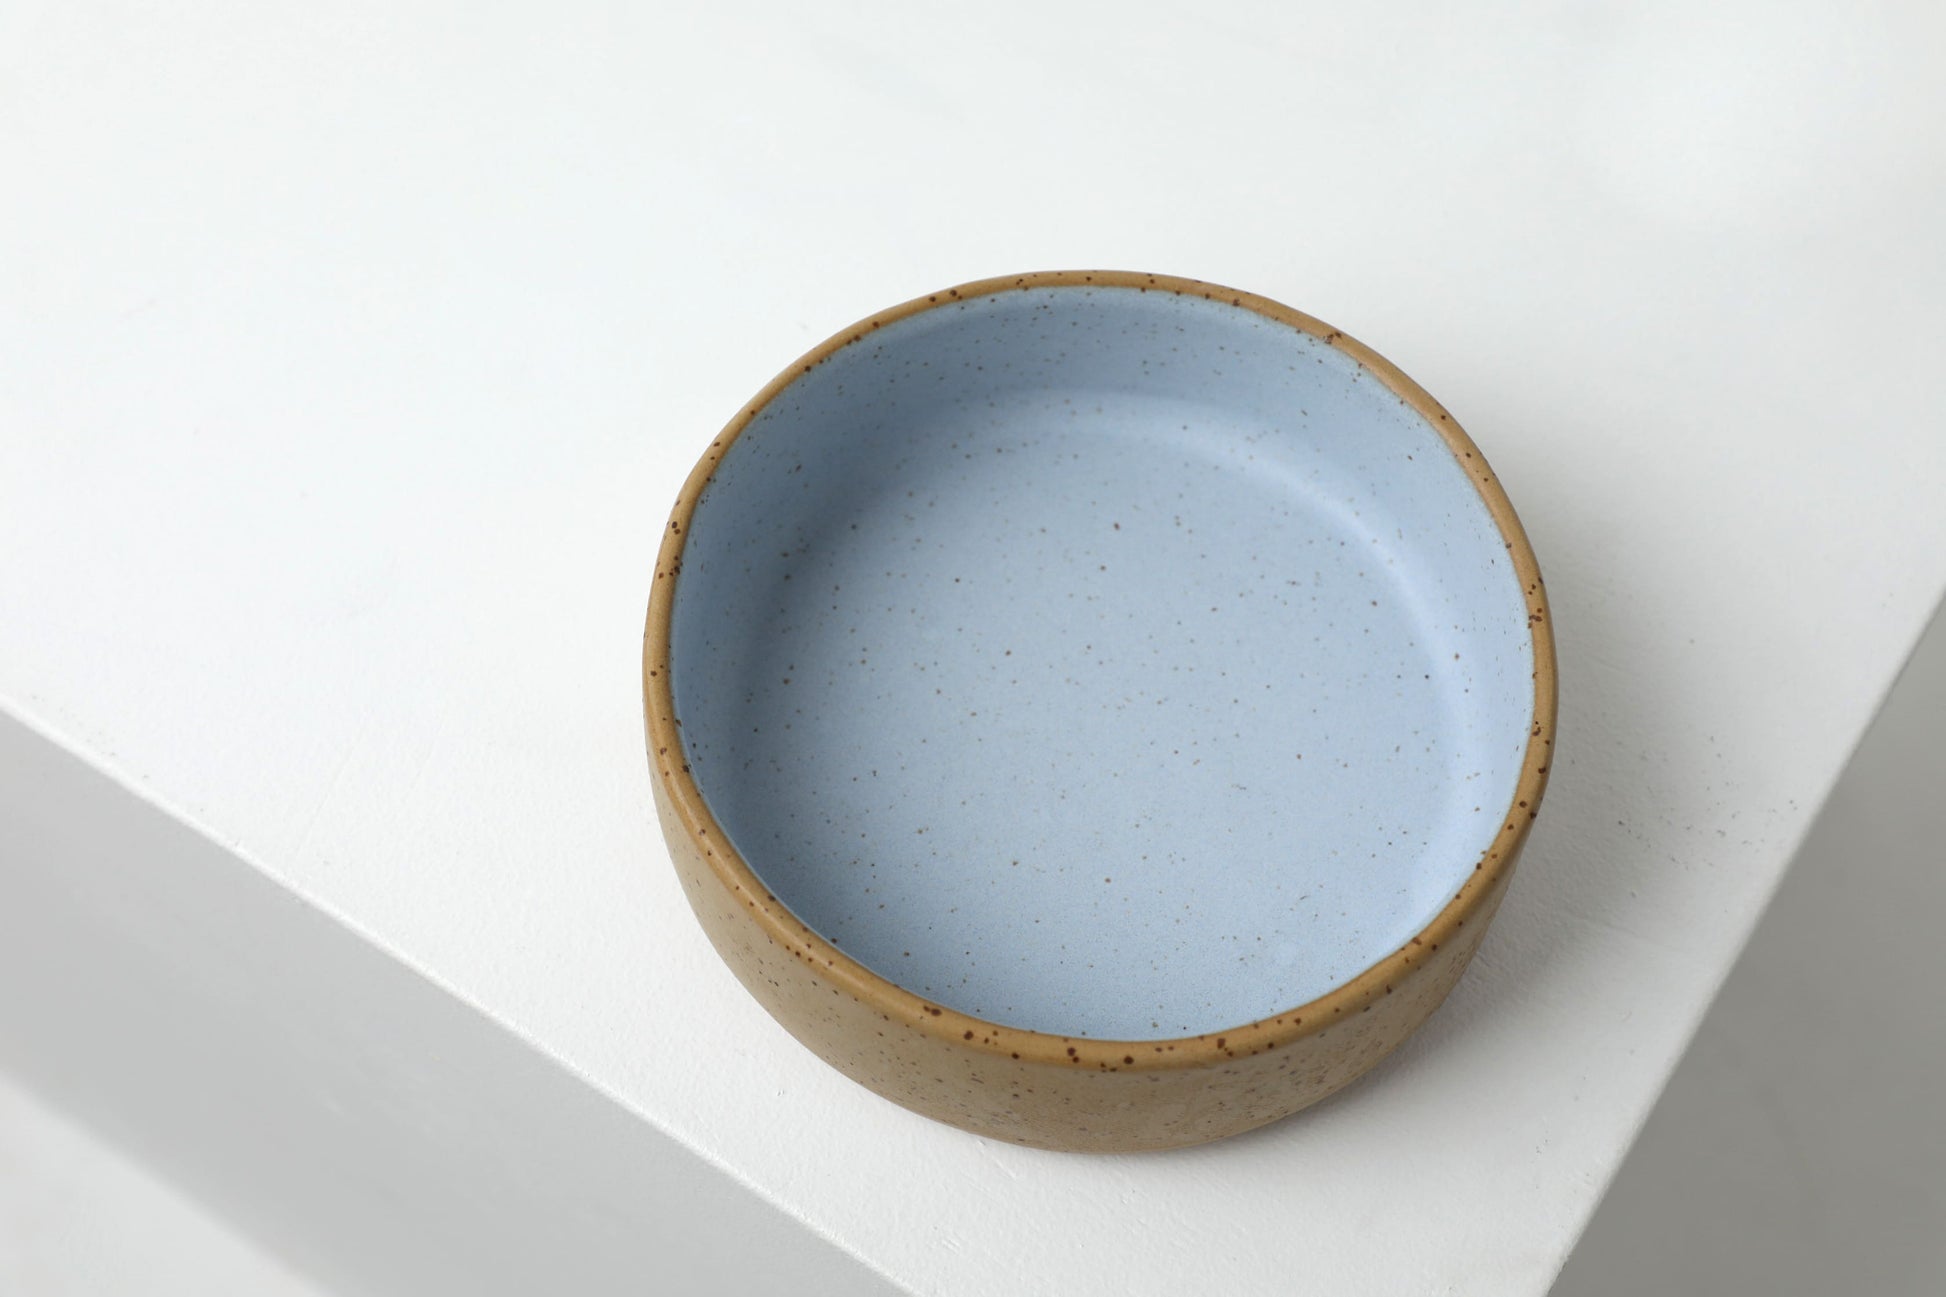 Handmade ceramic dog bowls | RAW+SKY BLUE - premium dog goods handmade in Europe by My Wild Other